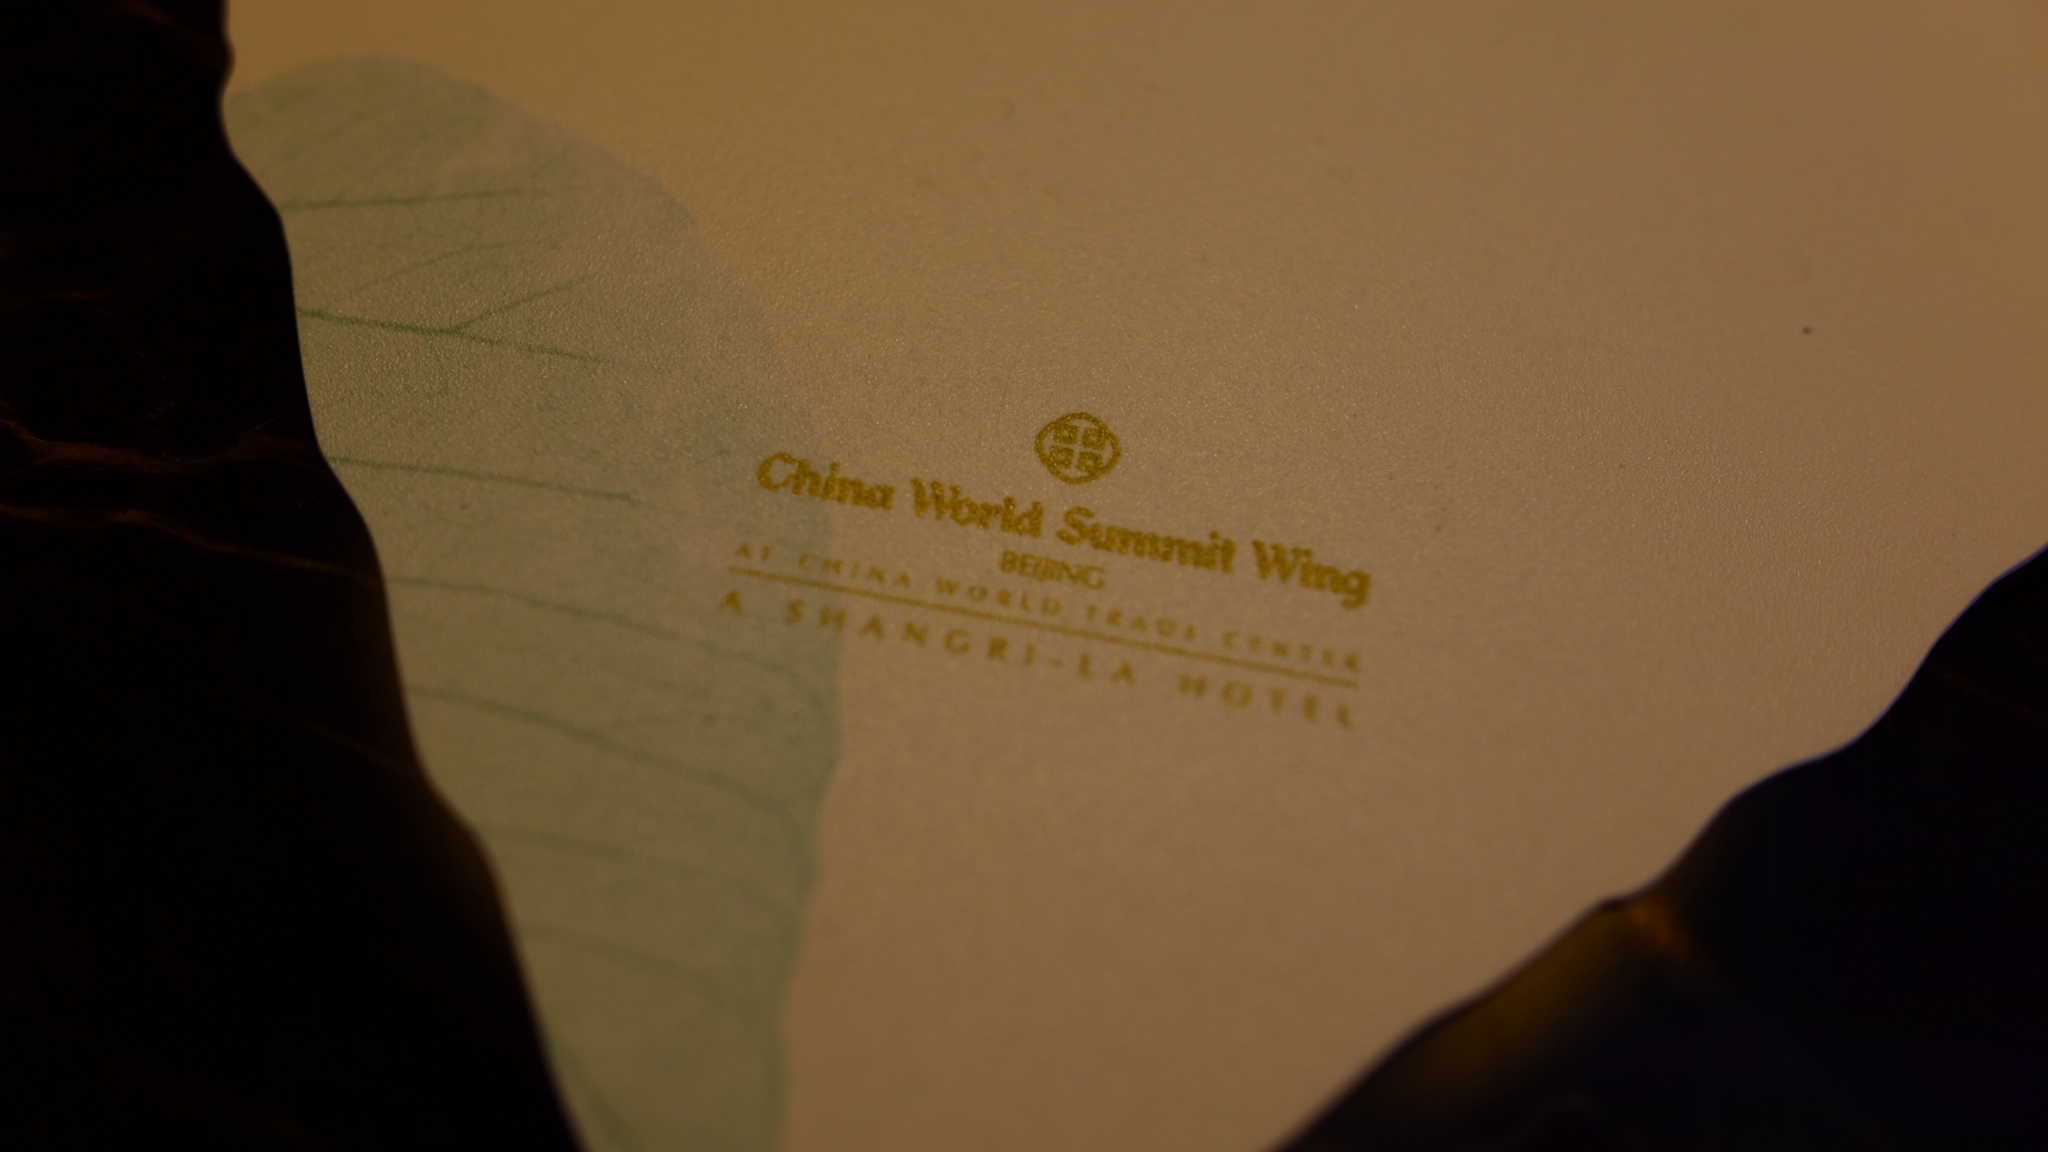 һϻ | óƵ China World Summit Wing,Beijing